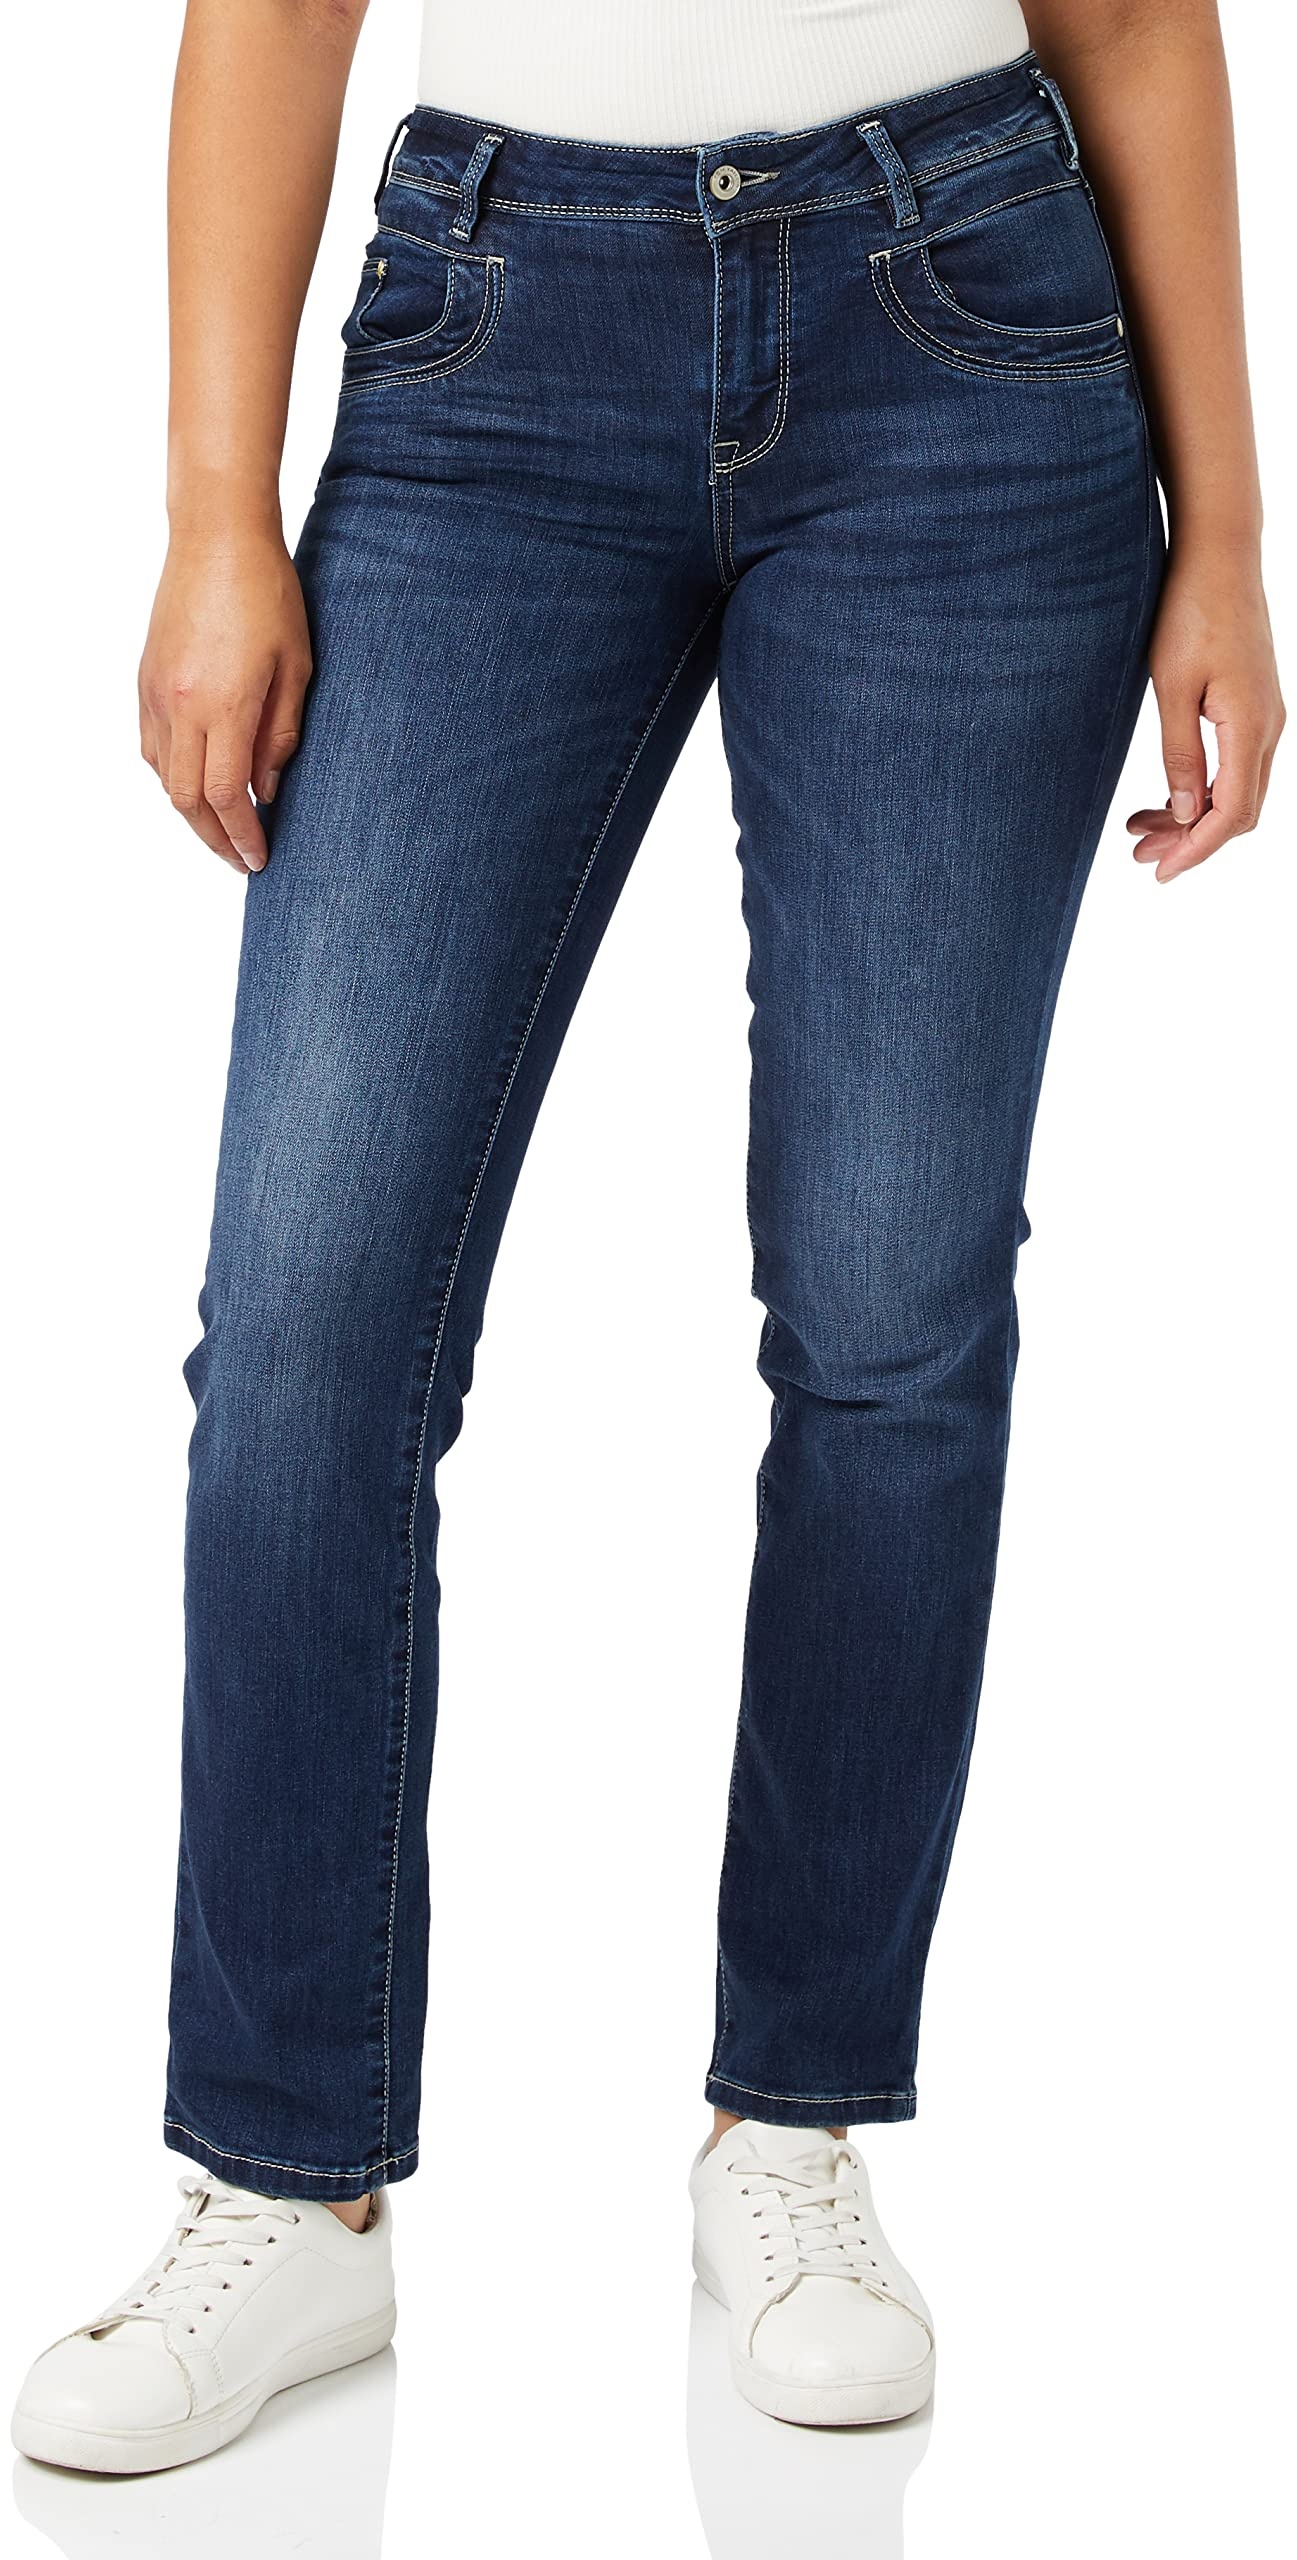 TOM TAILOR Damen 1008146 Alexa Straight Jeans, 10282 - Dark Stone Wash Denim, 34W / 30L EU